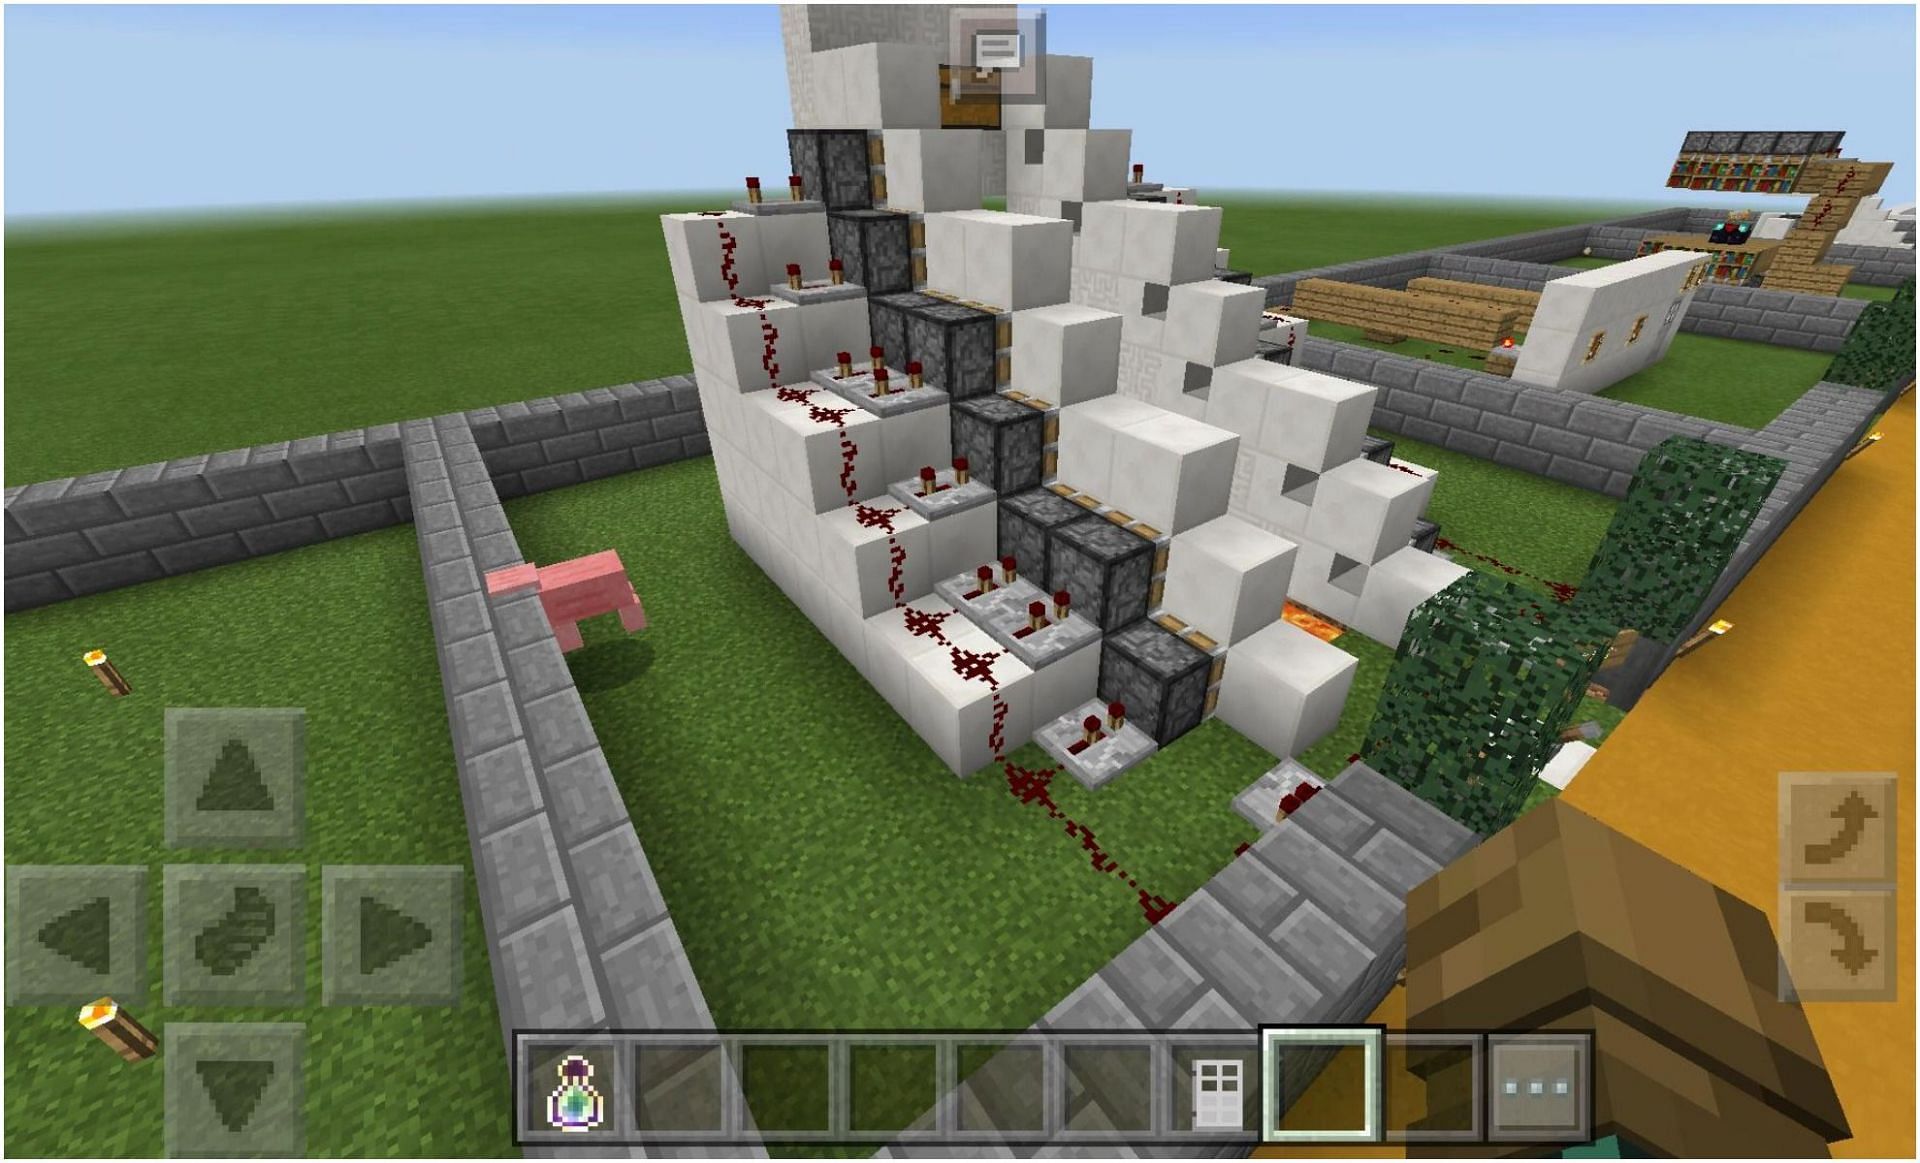 A redstone build in progress in (Image via Minecraft)